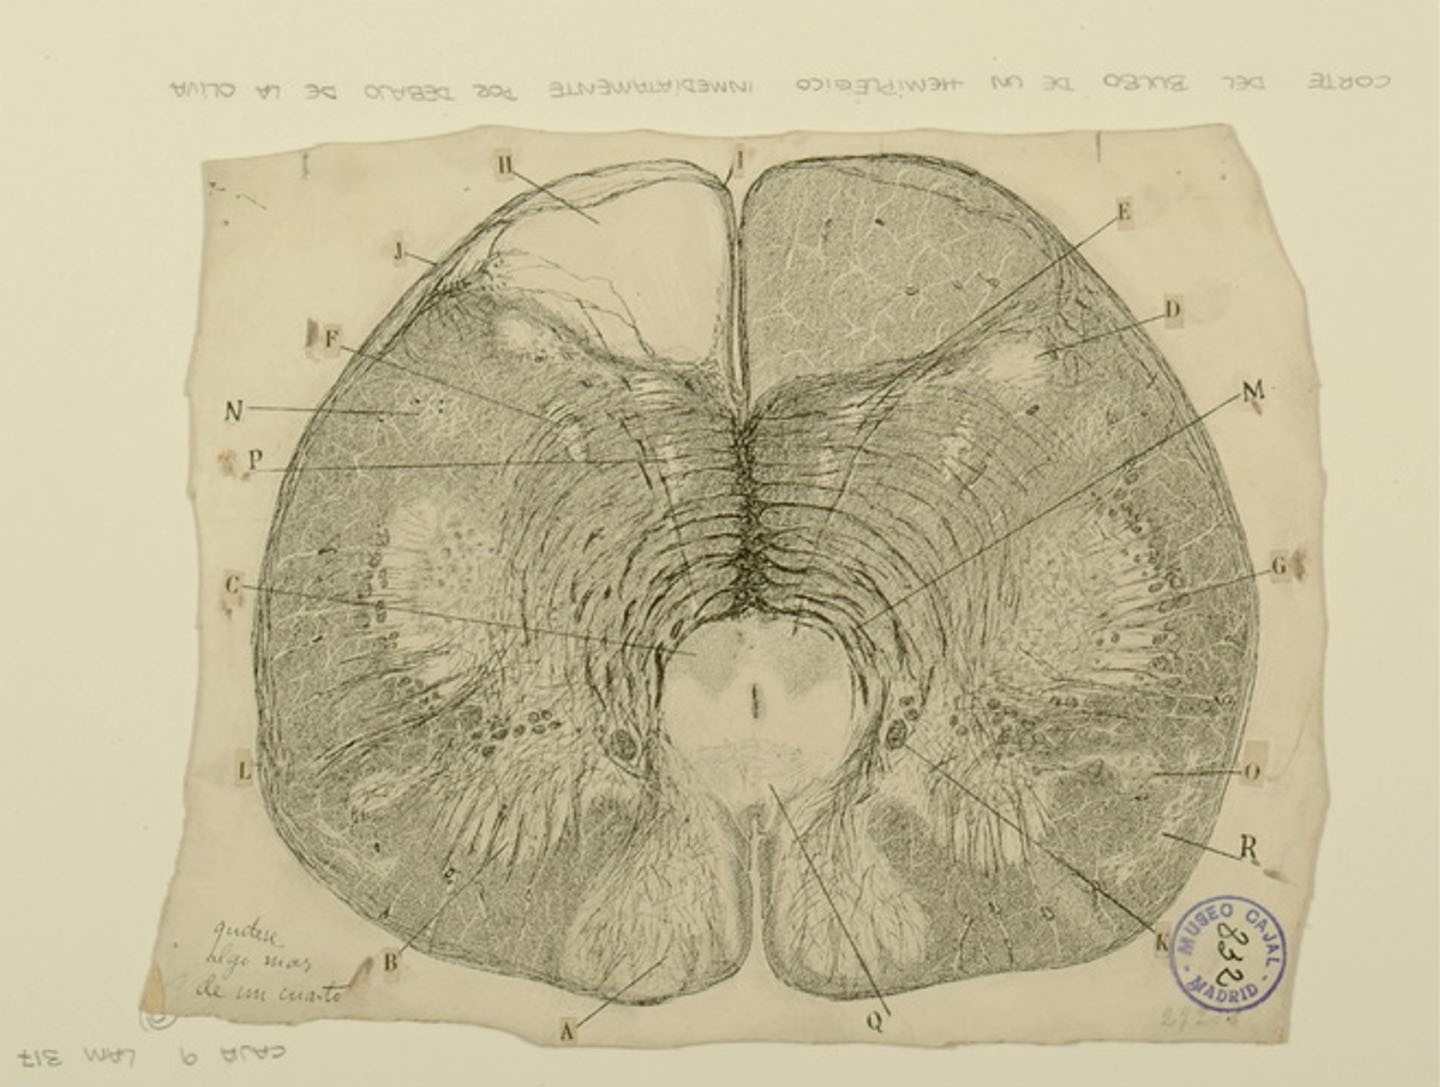 Illustration of a Medulla oblongata from a hemiplegic individual